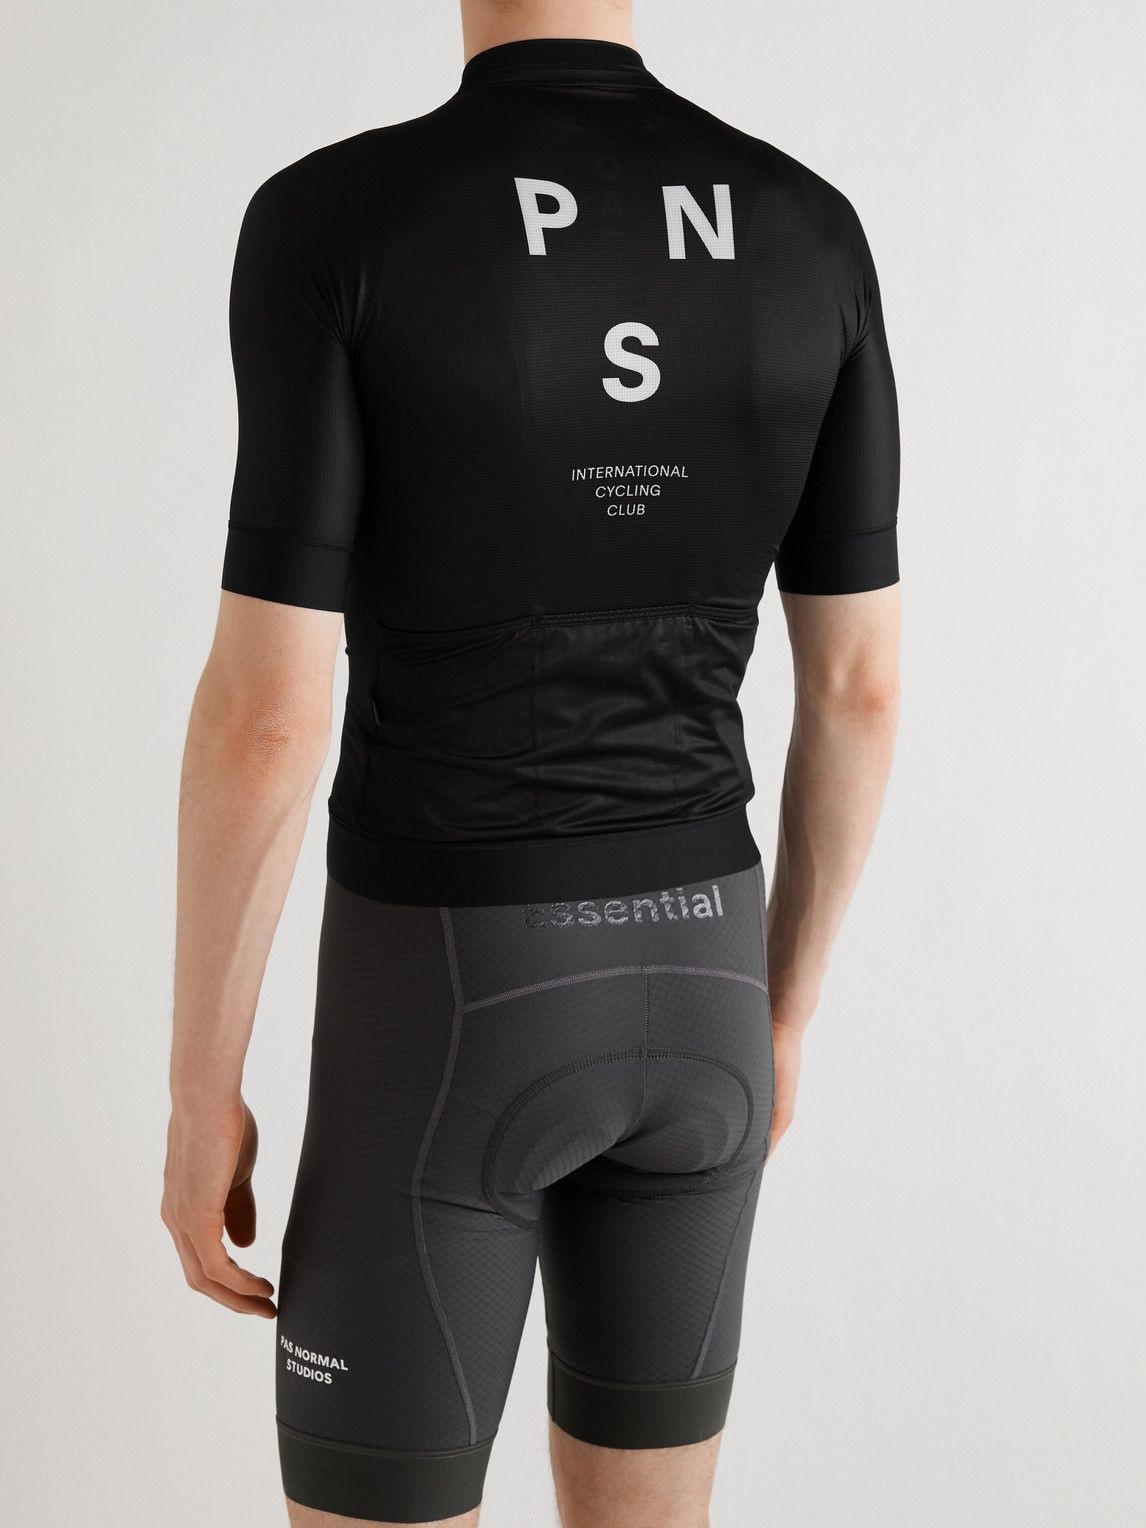 Pas Normal Studios - Mechanism Logo-Print Cycling Jersey - Black 